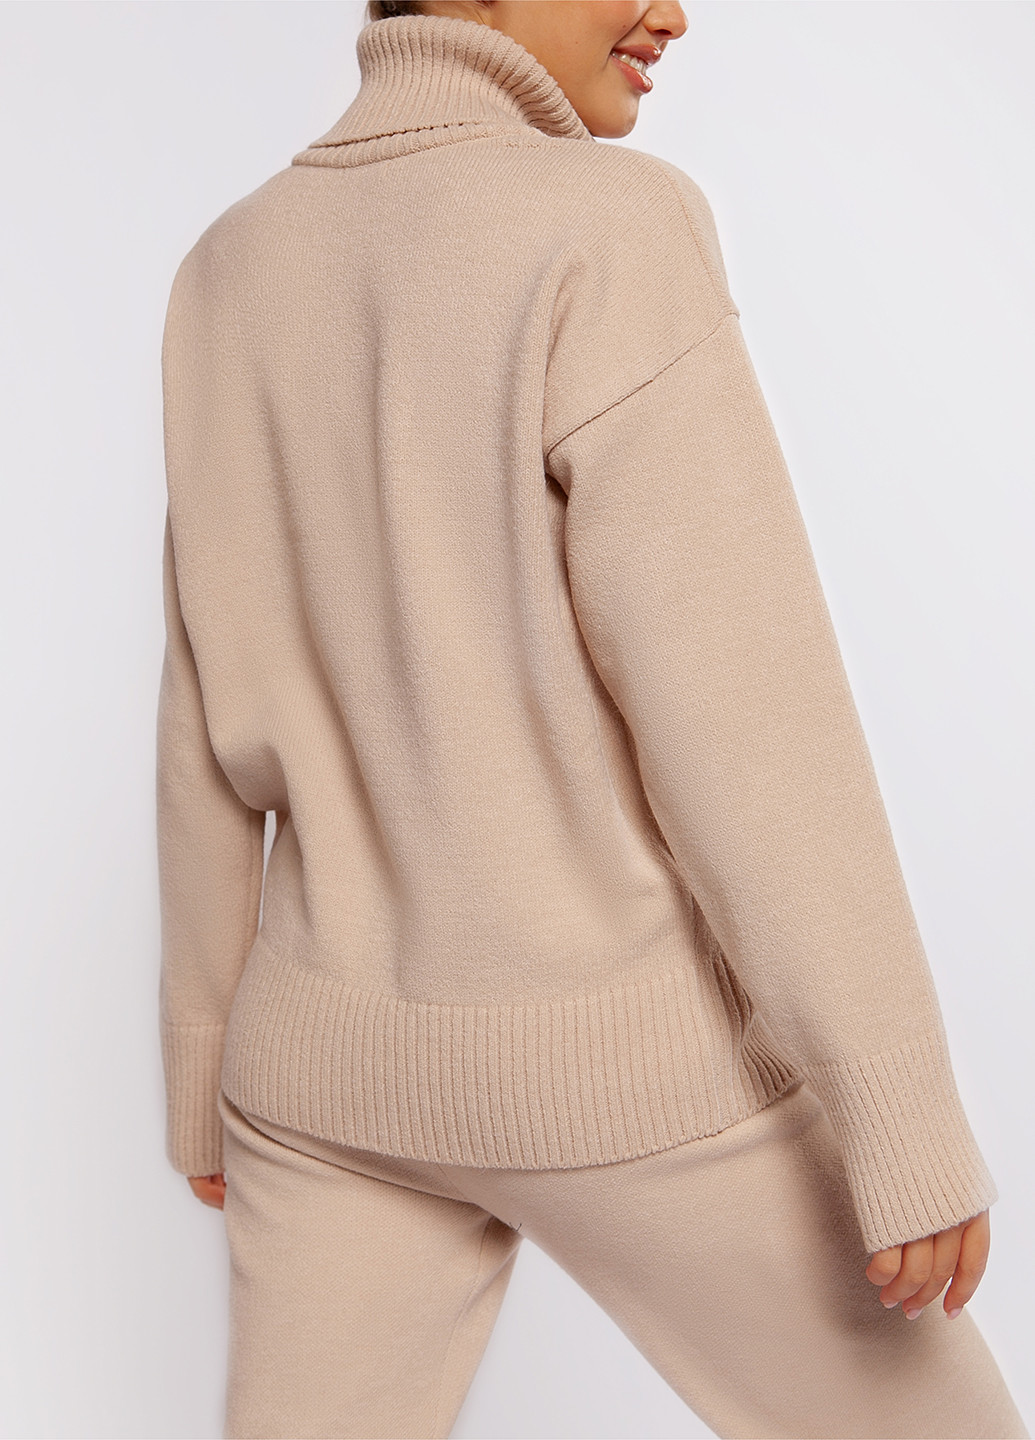 Светло-бежевый зимний свитер Sewel